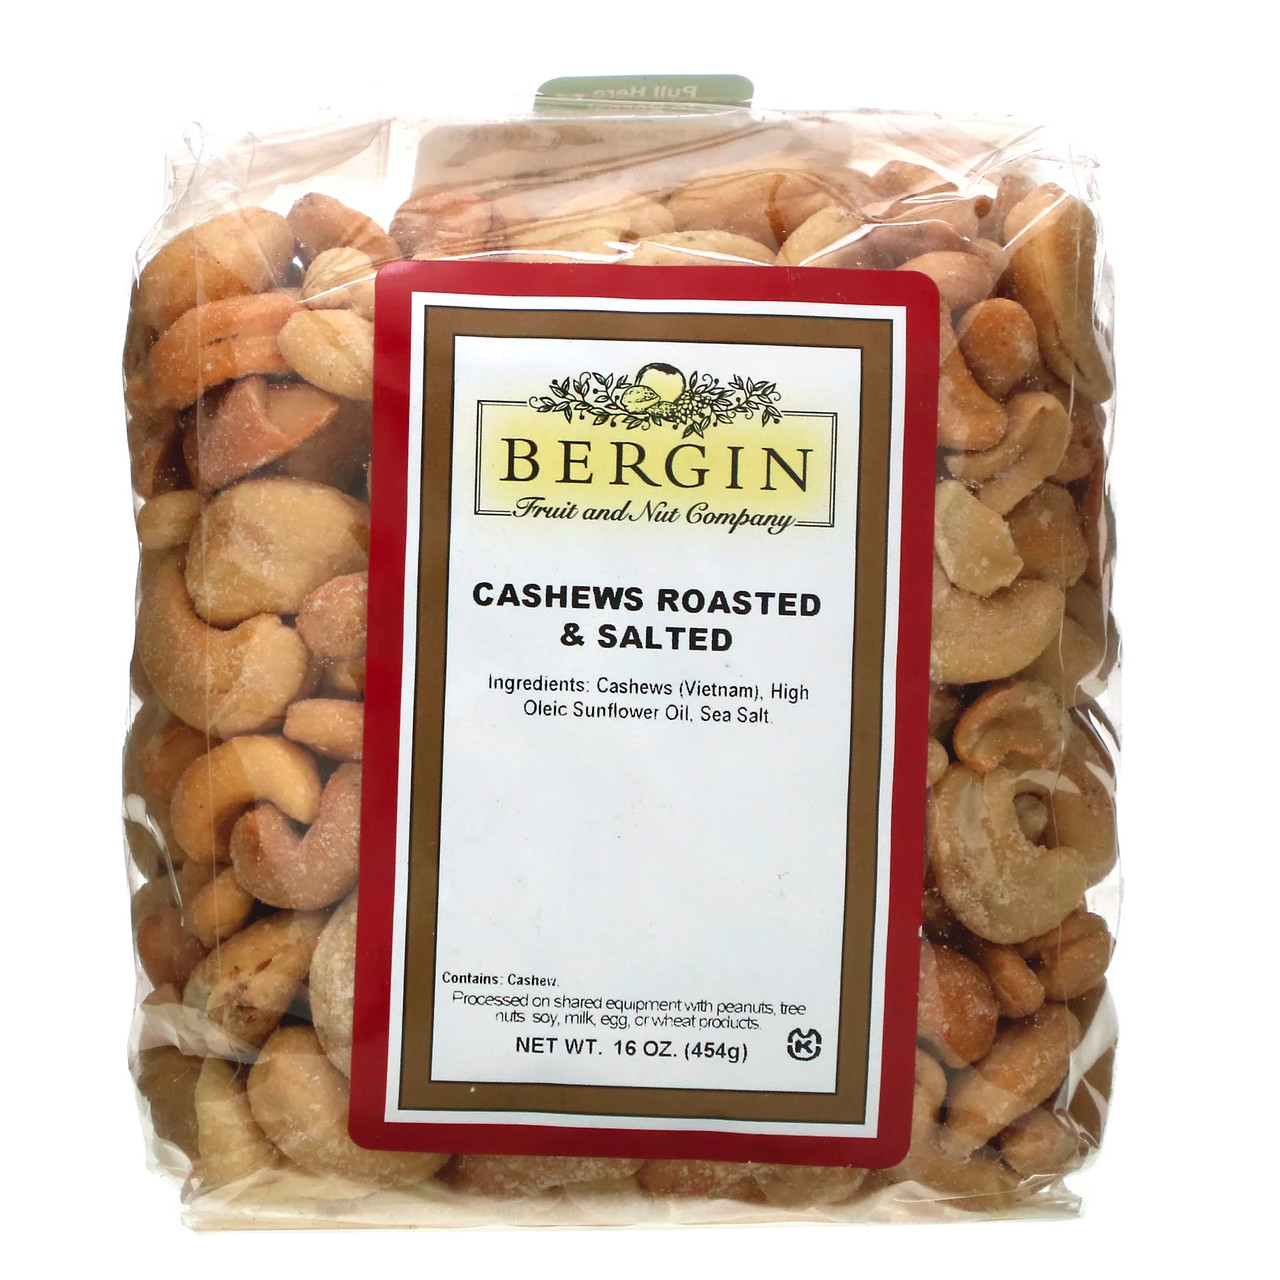 Bergin Fruit and Nut Company, Цілісні підсмажені кешью з сіллю, 16 унцій